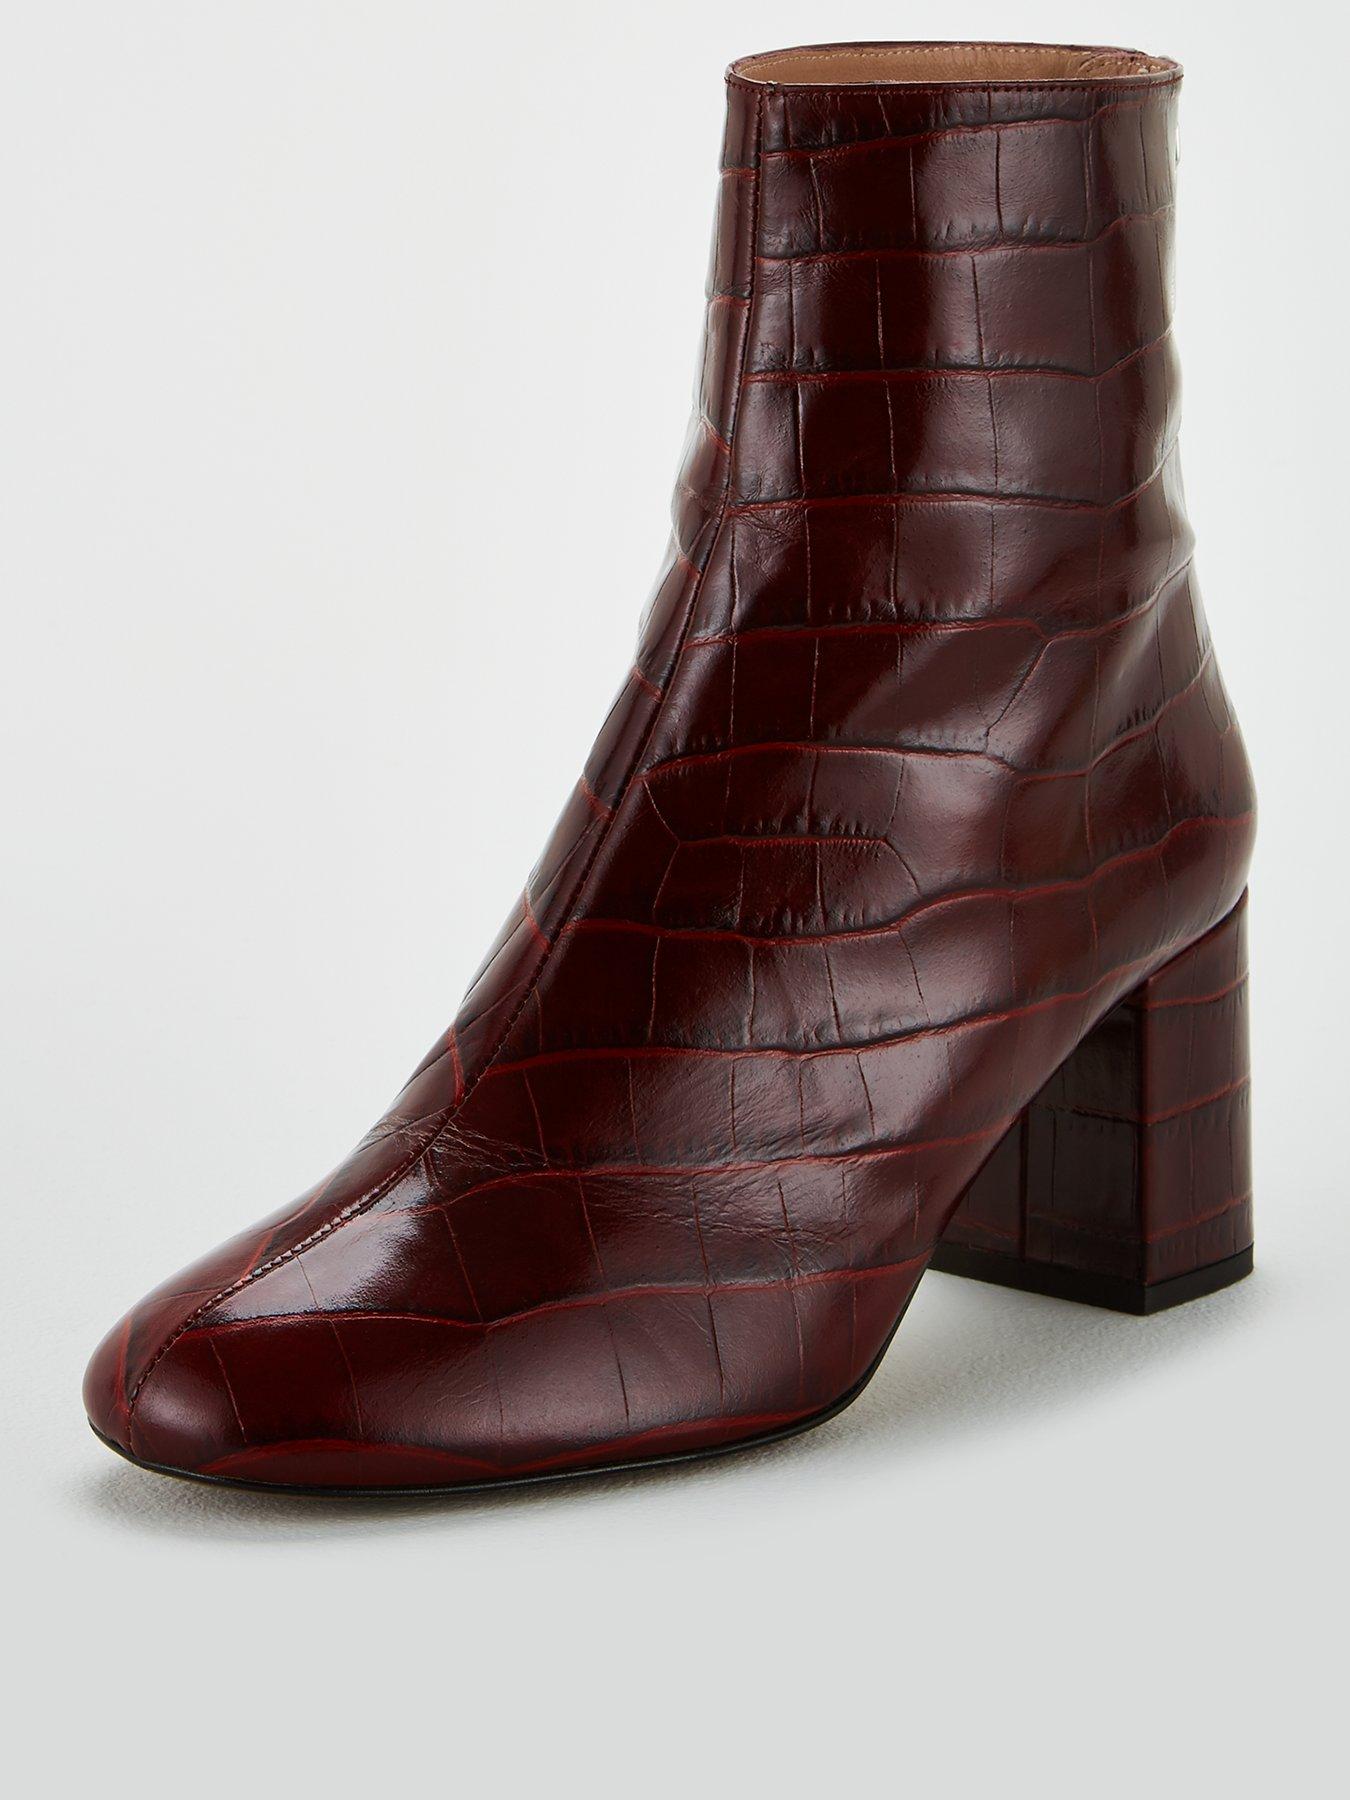 burgundy shoe boots uk